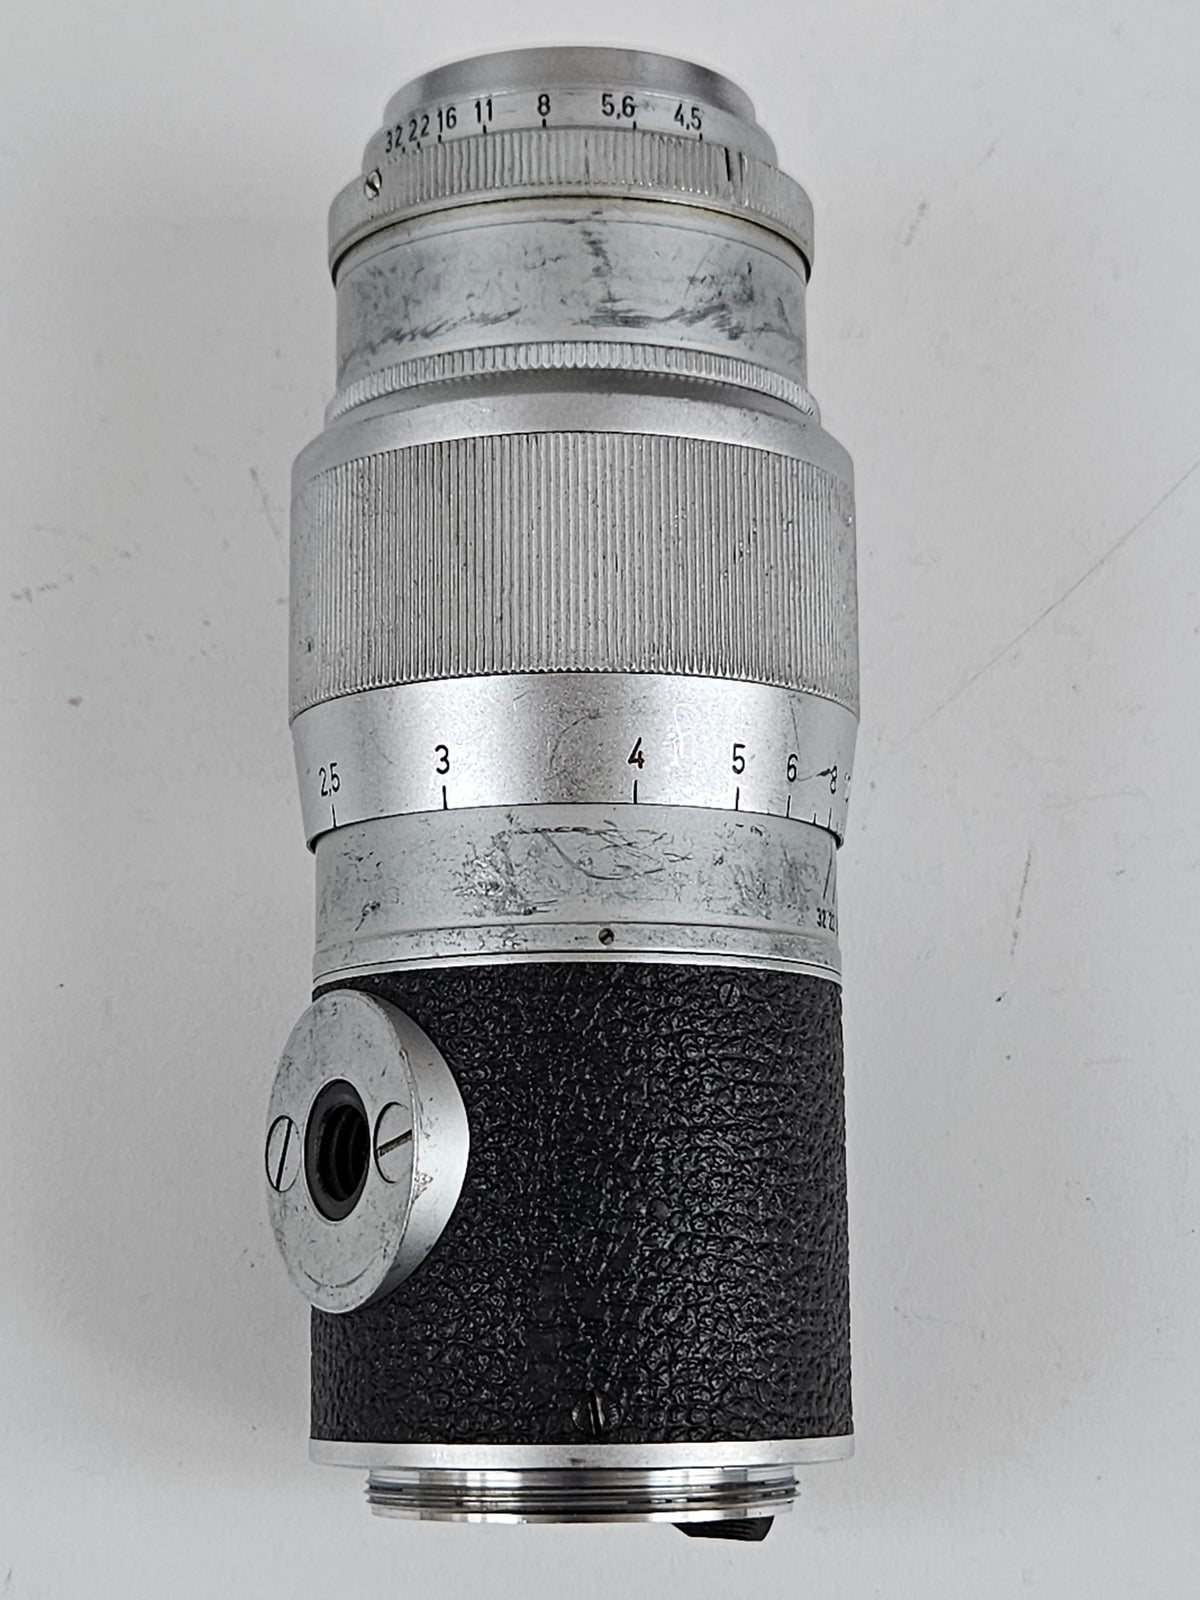 Tele, Leica, Hektor 135/4.5 L39